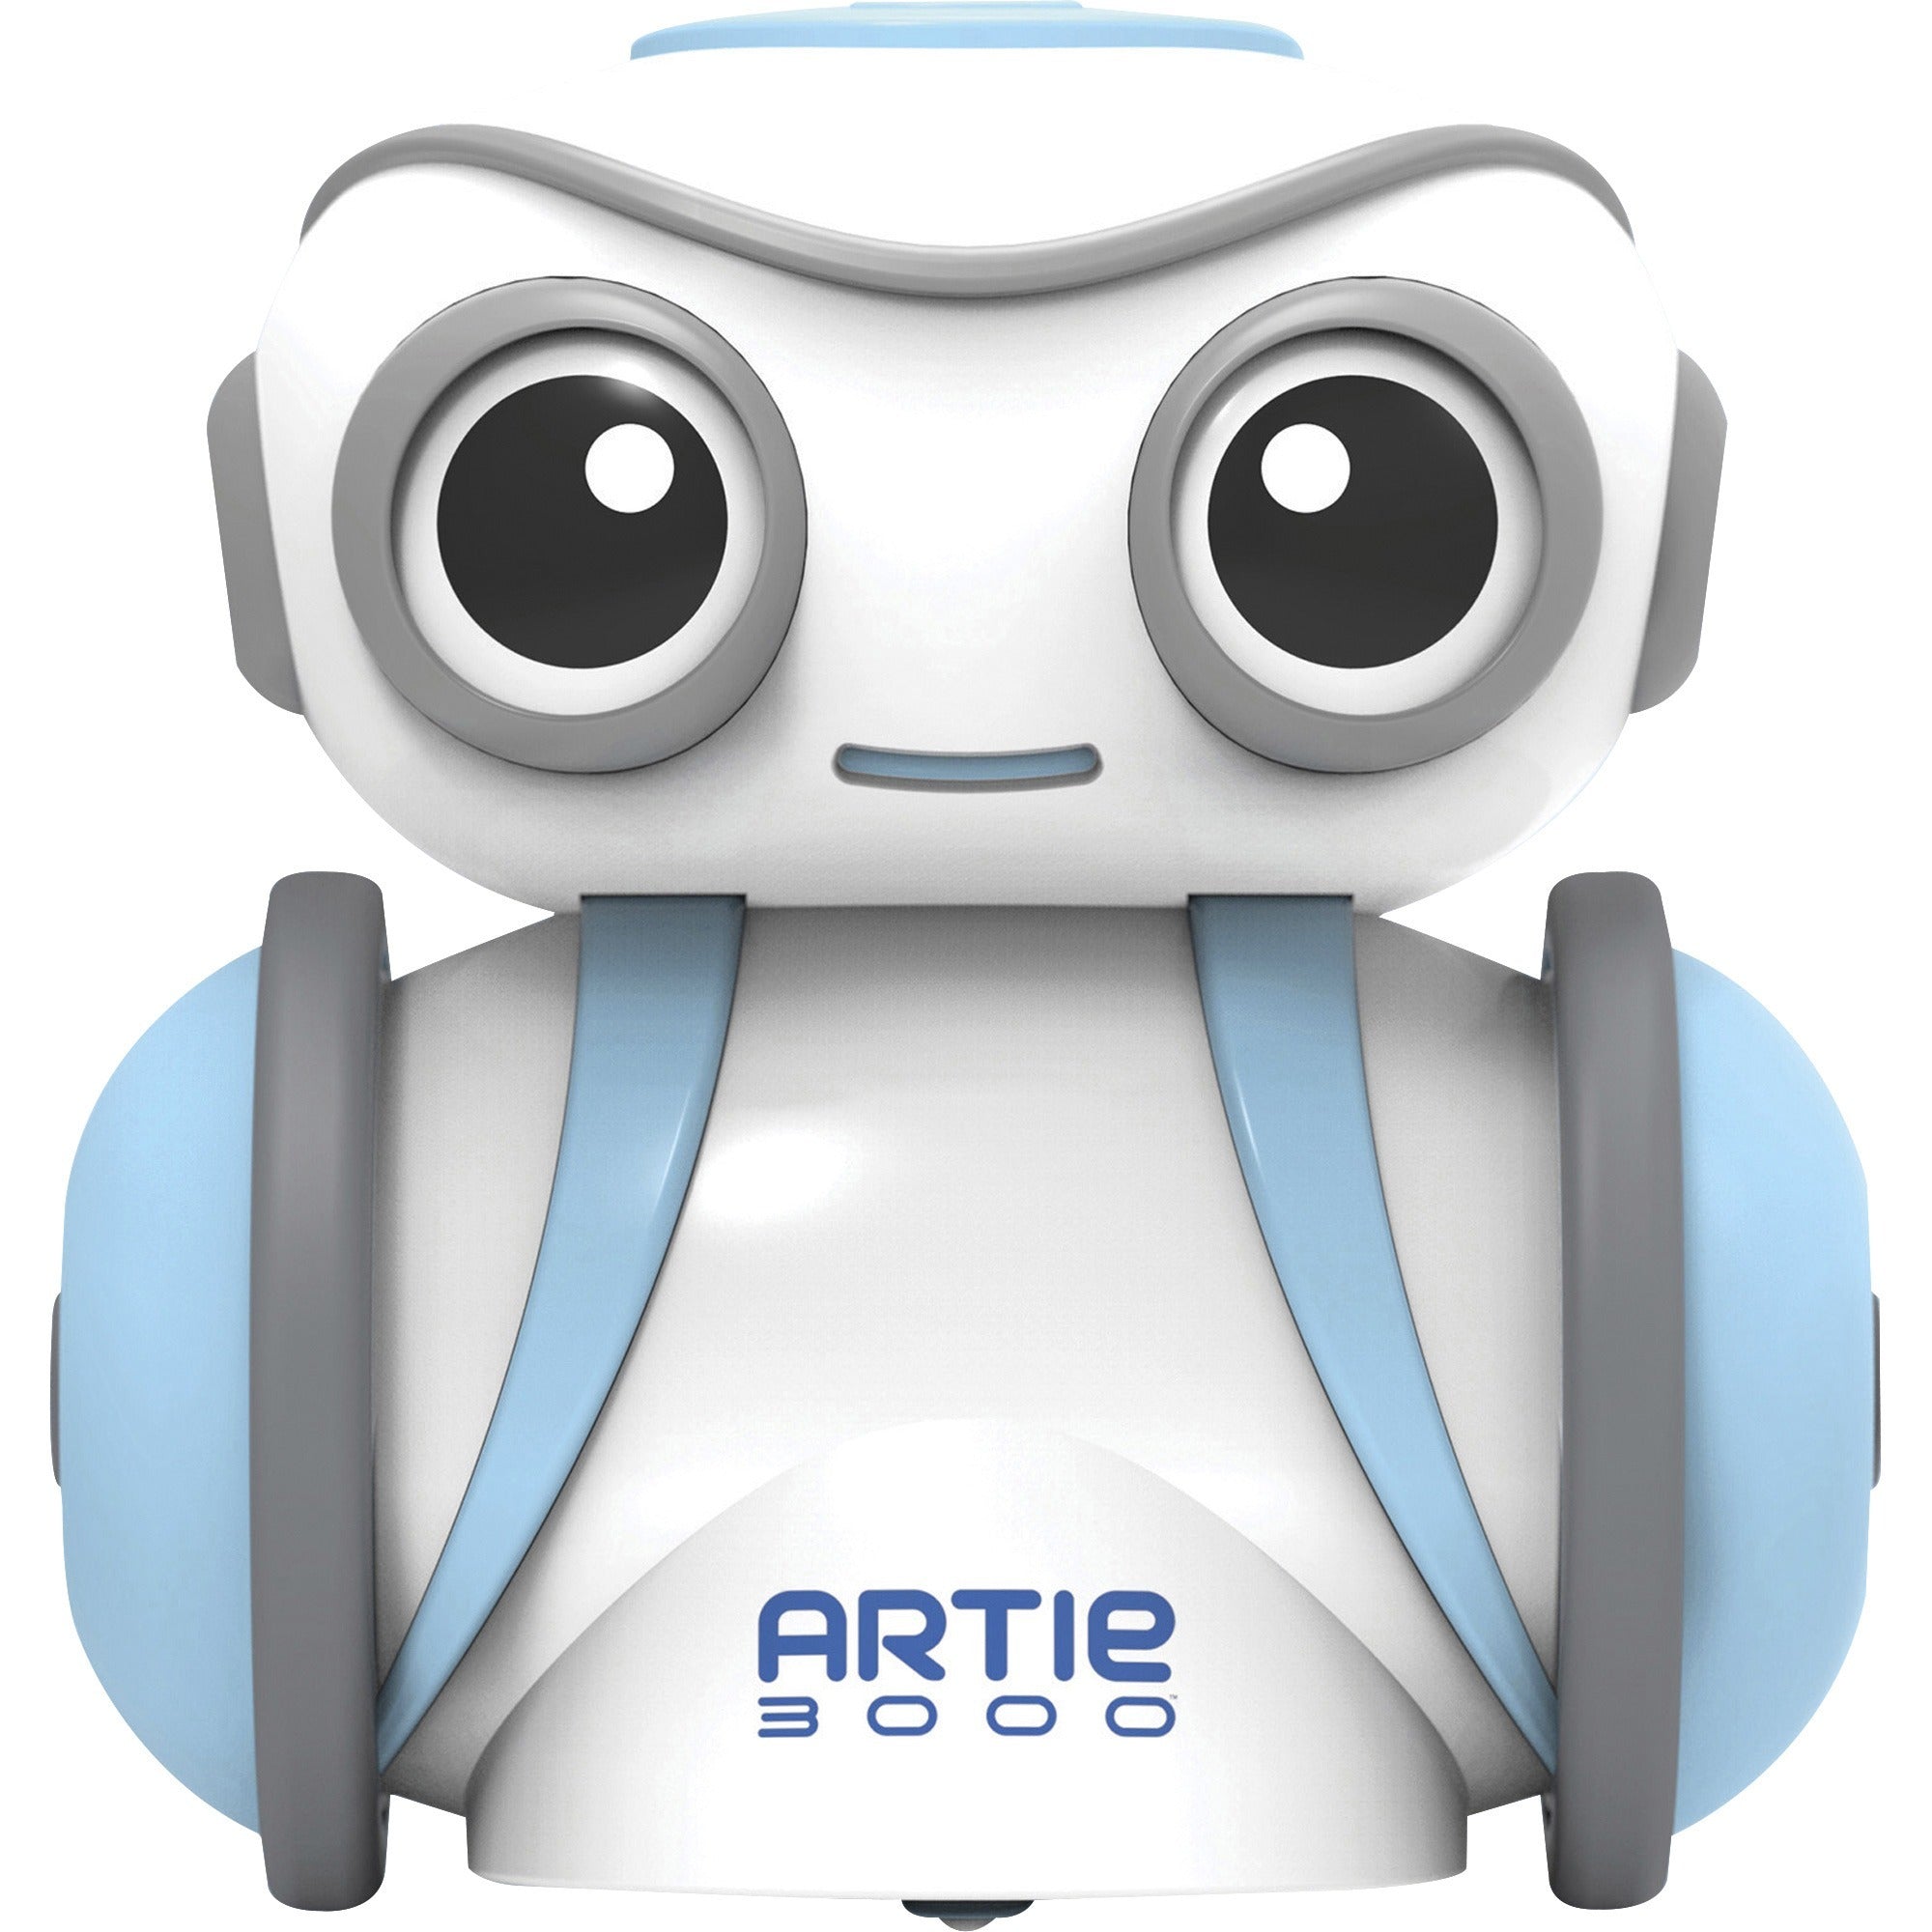 educational-insights-artie-3000-the-coding-robot-skill-learning-steam-stem-creativity-robot-imagination-7-12-year-multi_eii1125 - 1